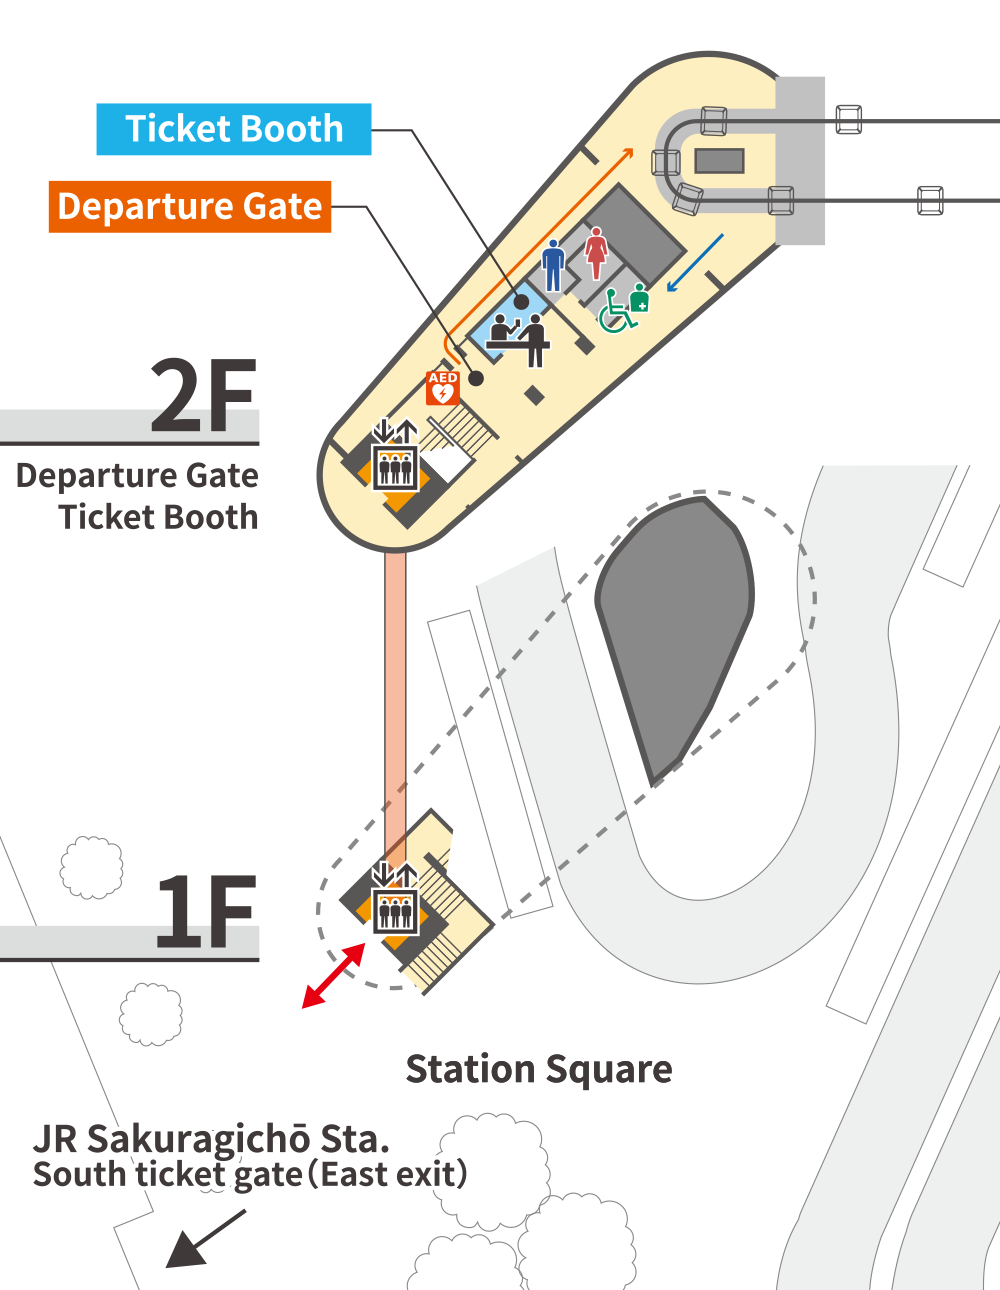 Sakuragi-cho Station floormap